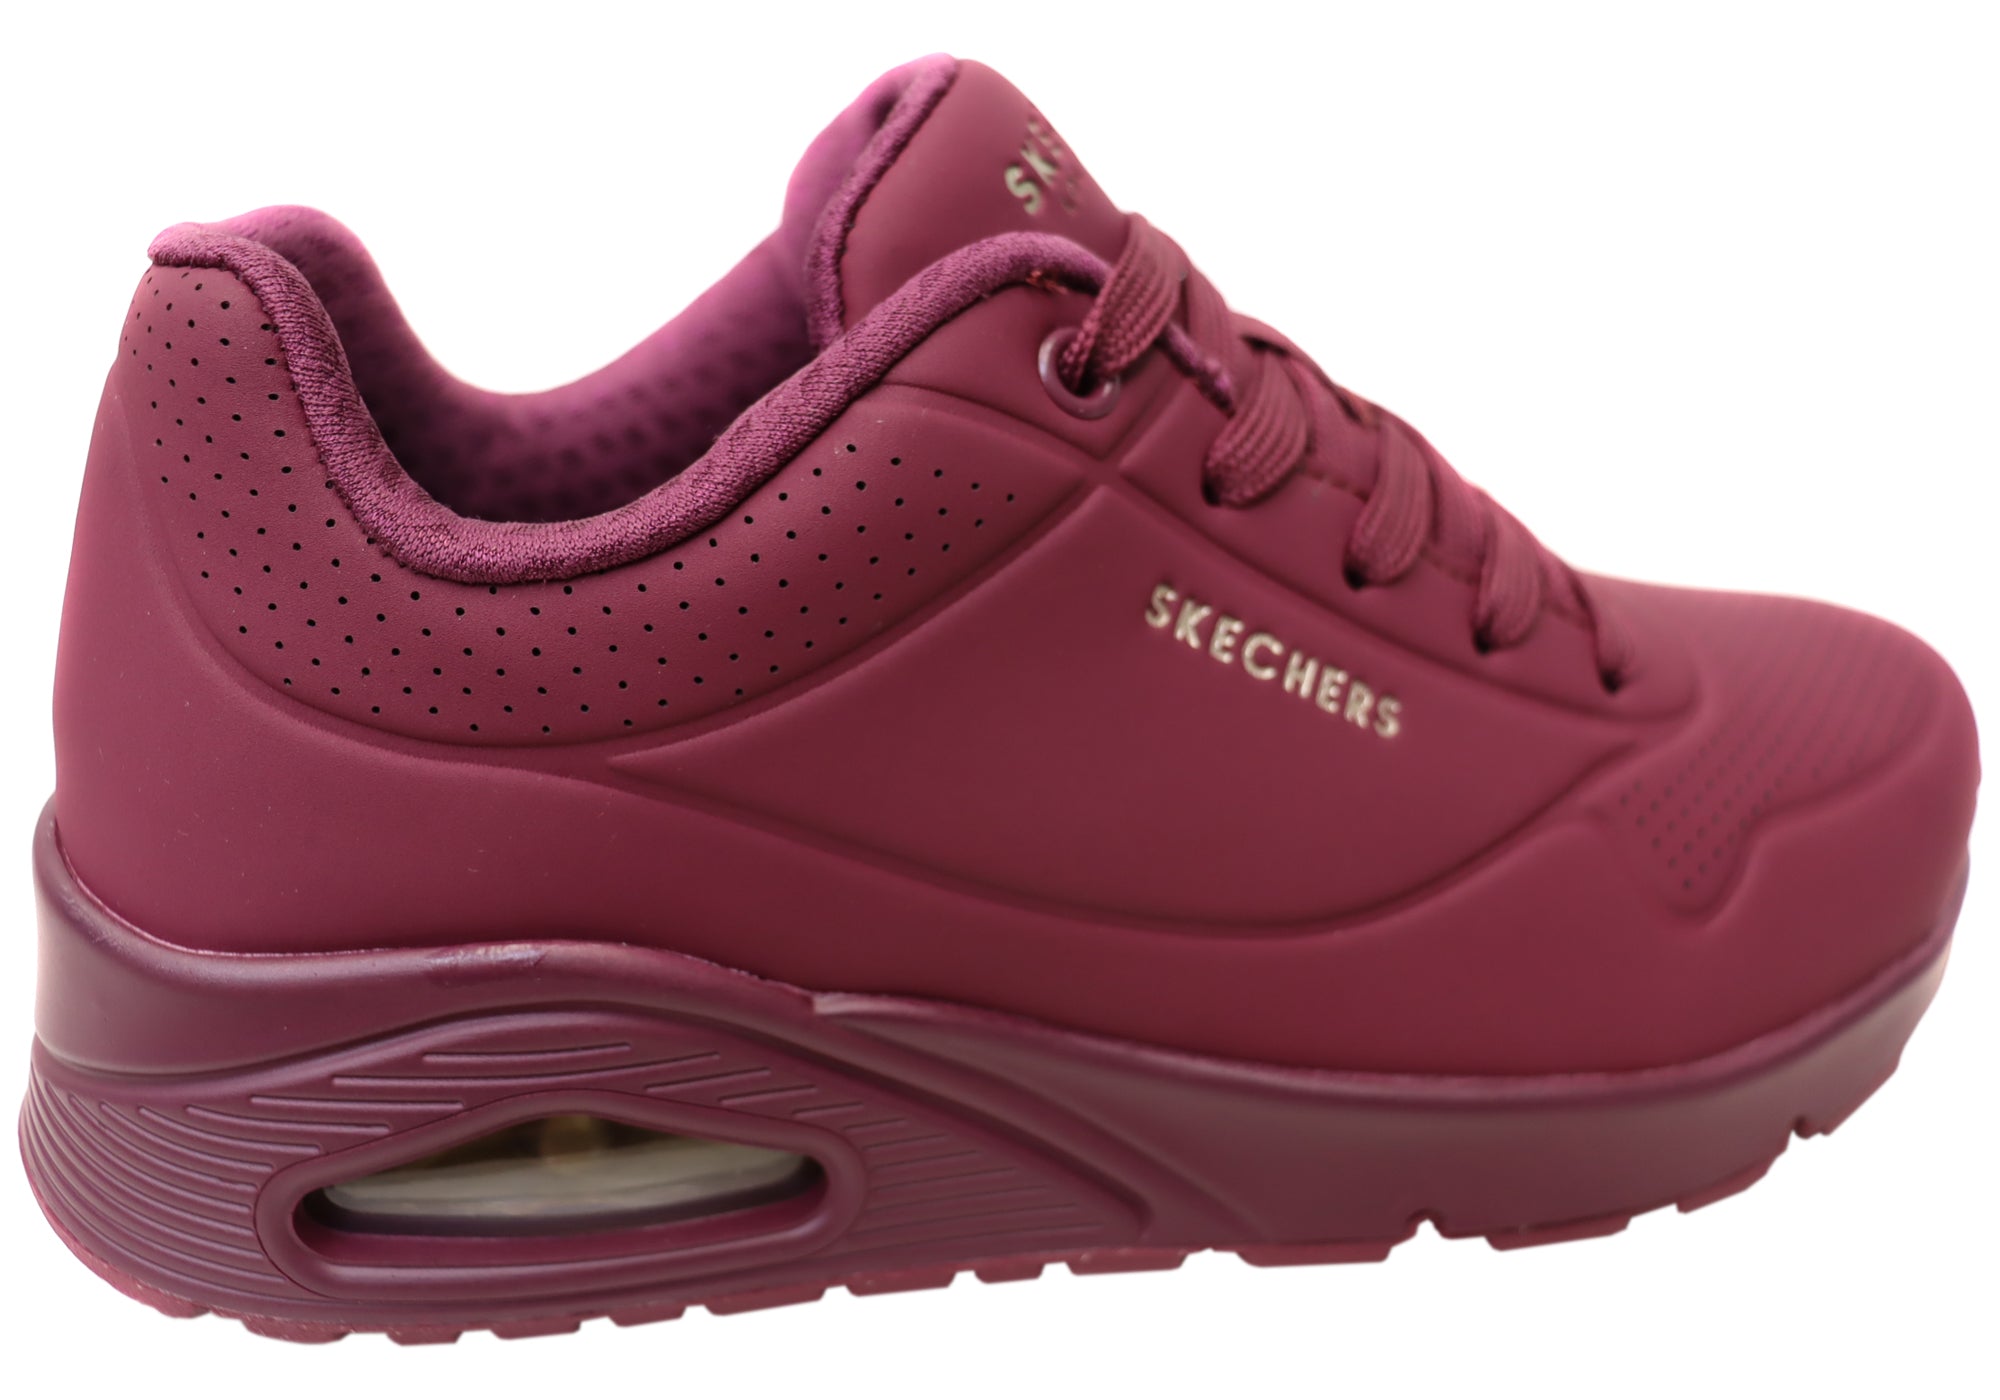 Grey Uno Tennis Shoes By Skechers | Skechers, Tennis shoes, 2 inch heels